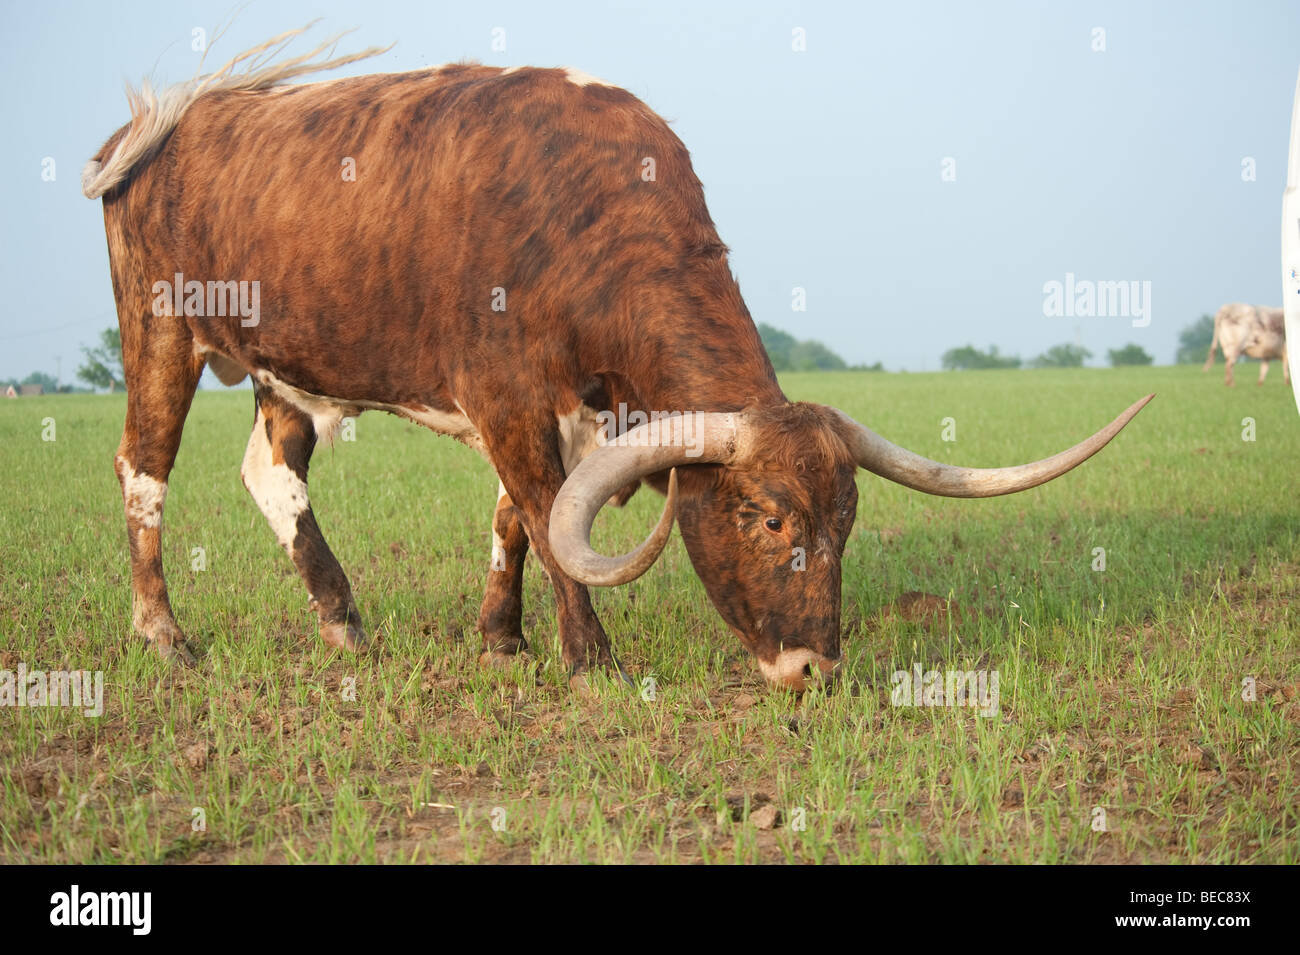 Texas Longhorn cattle grazing Stock Photo